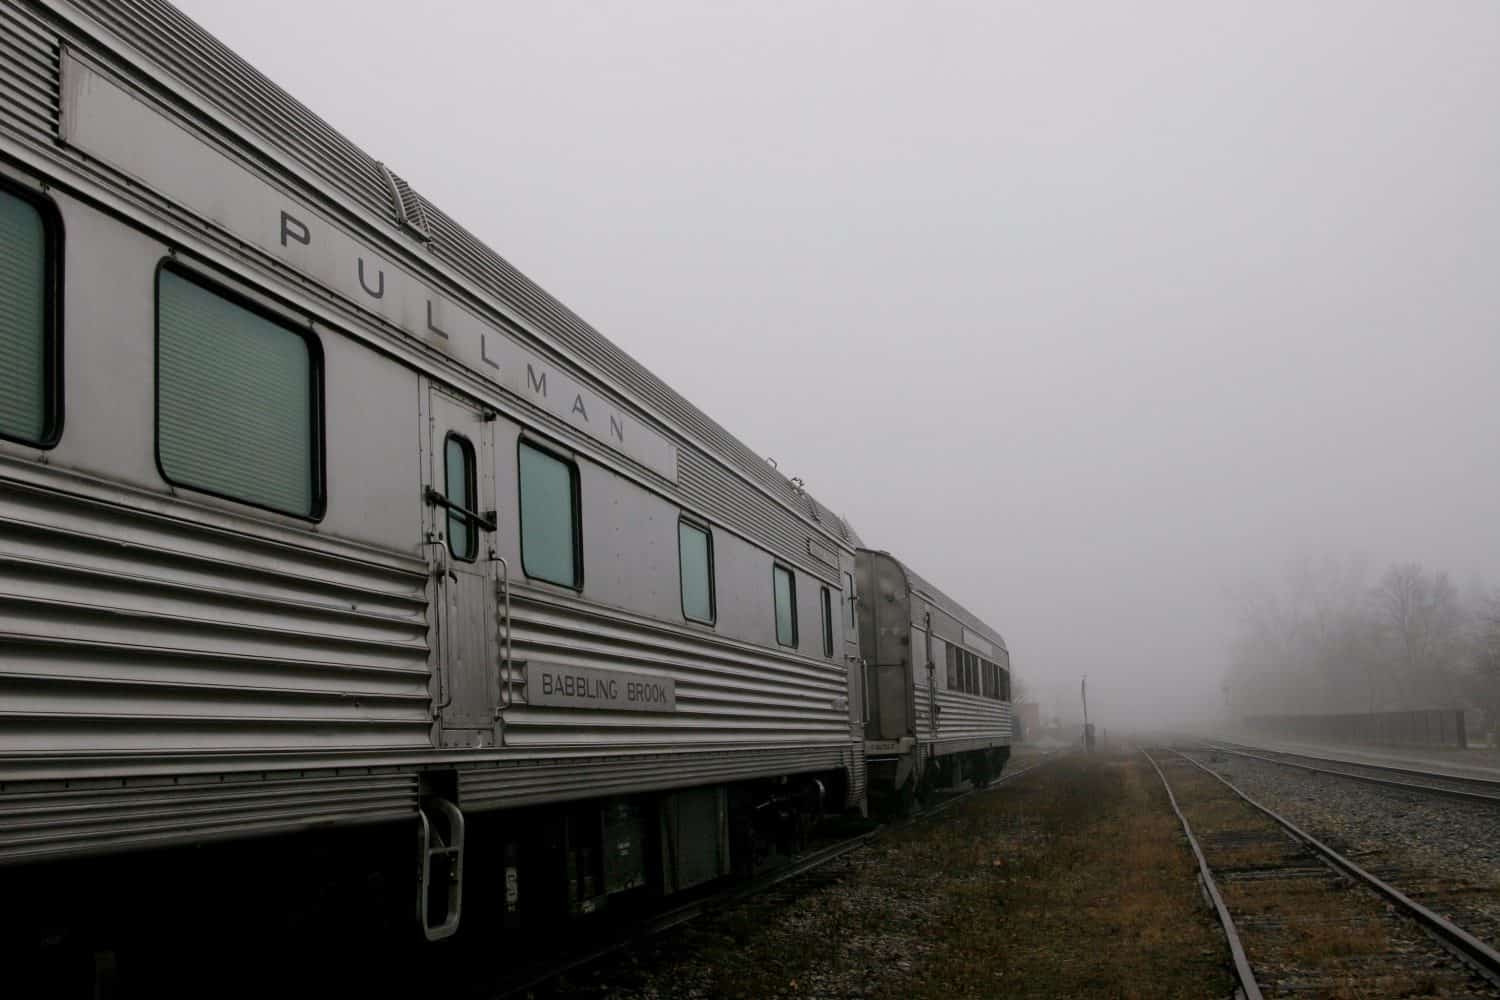 Pullman railroad sleeper cars in fog